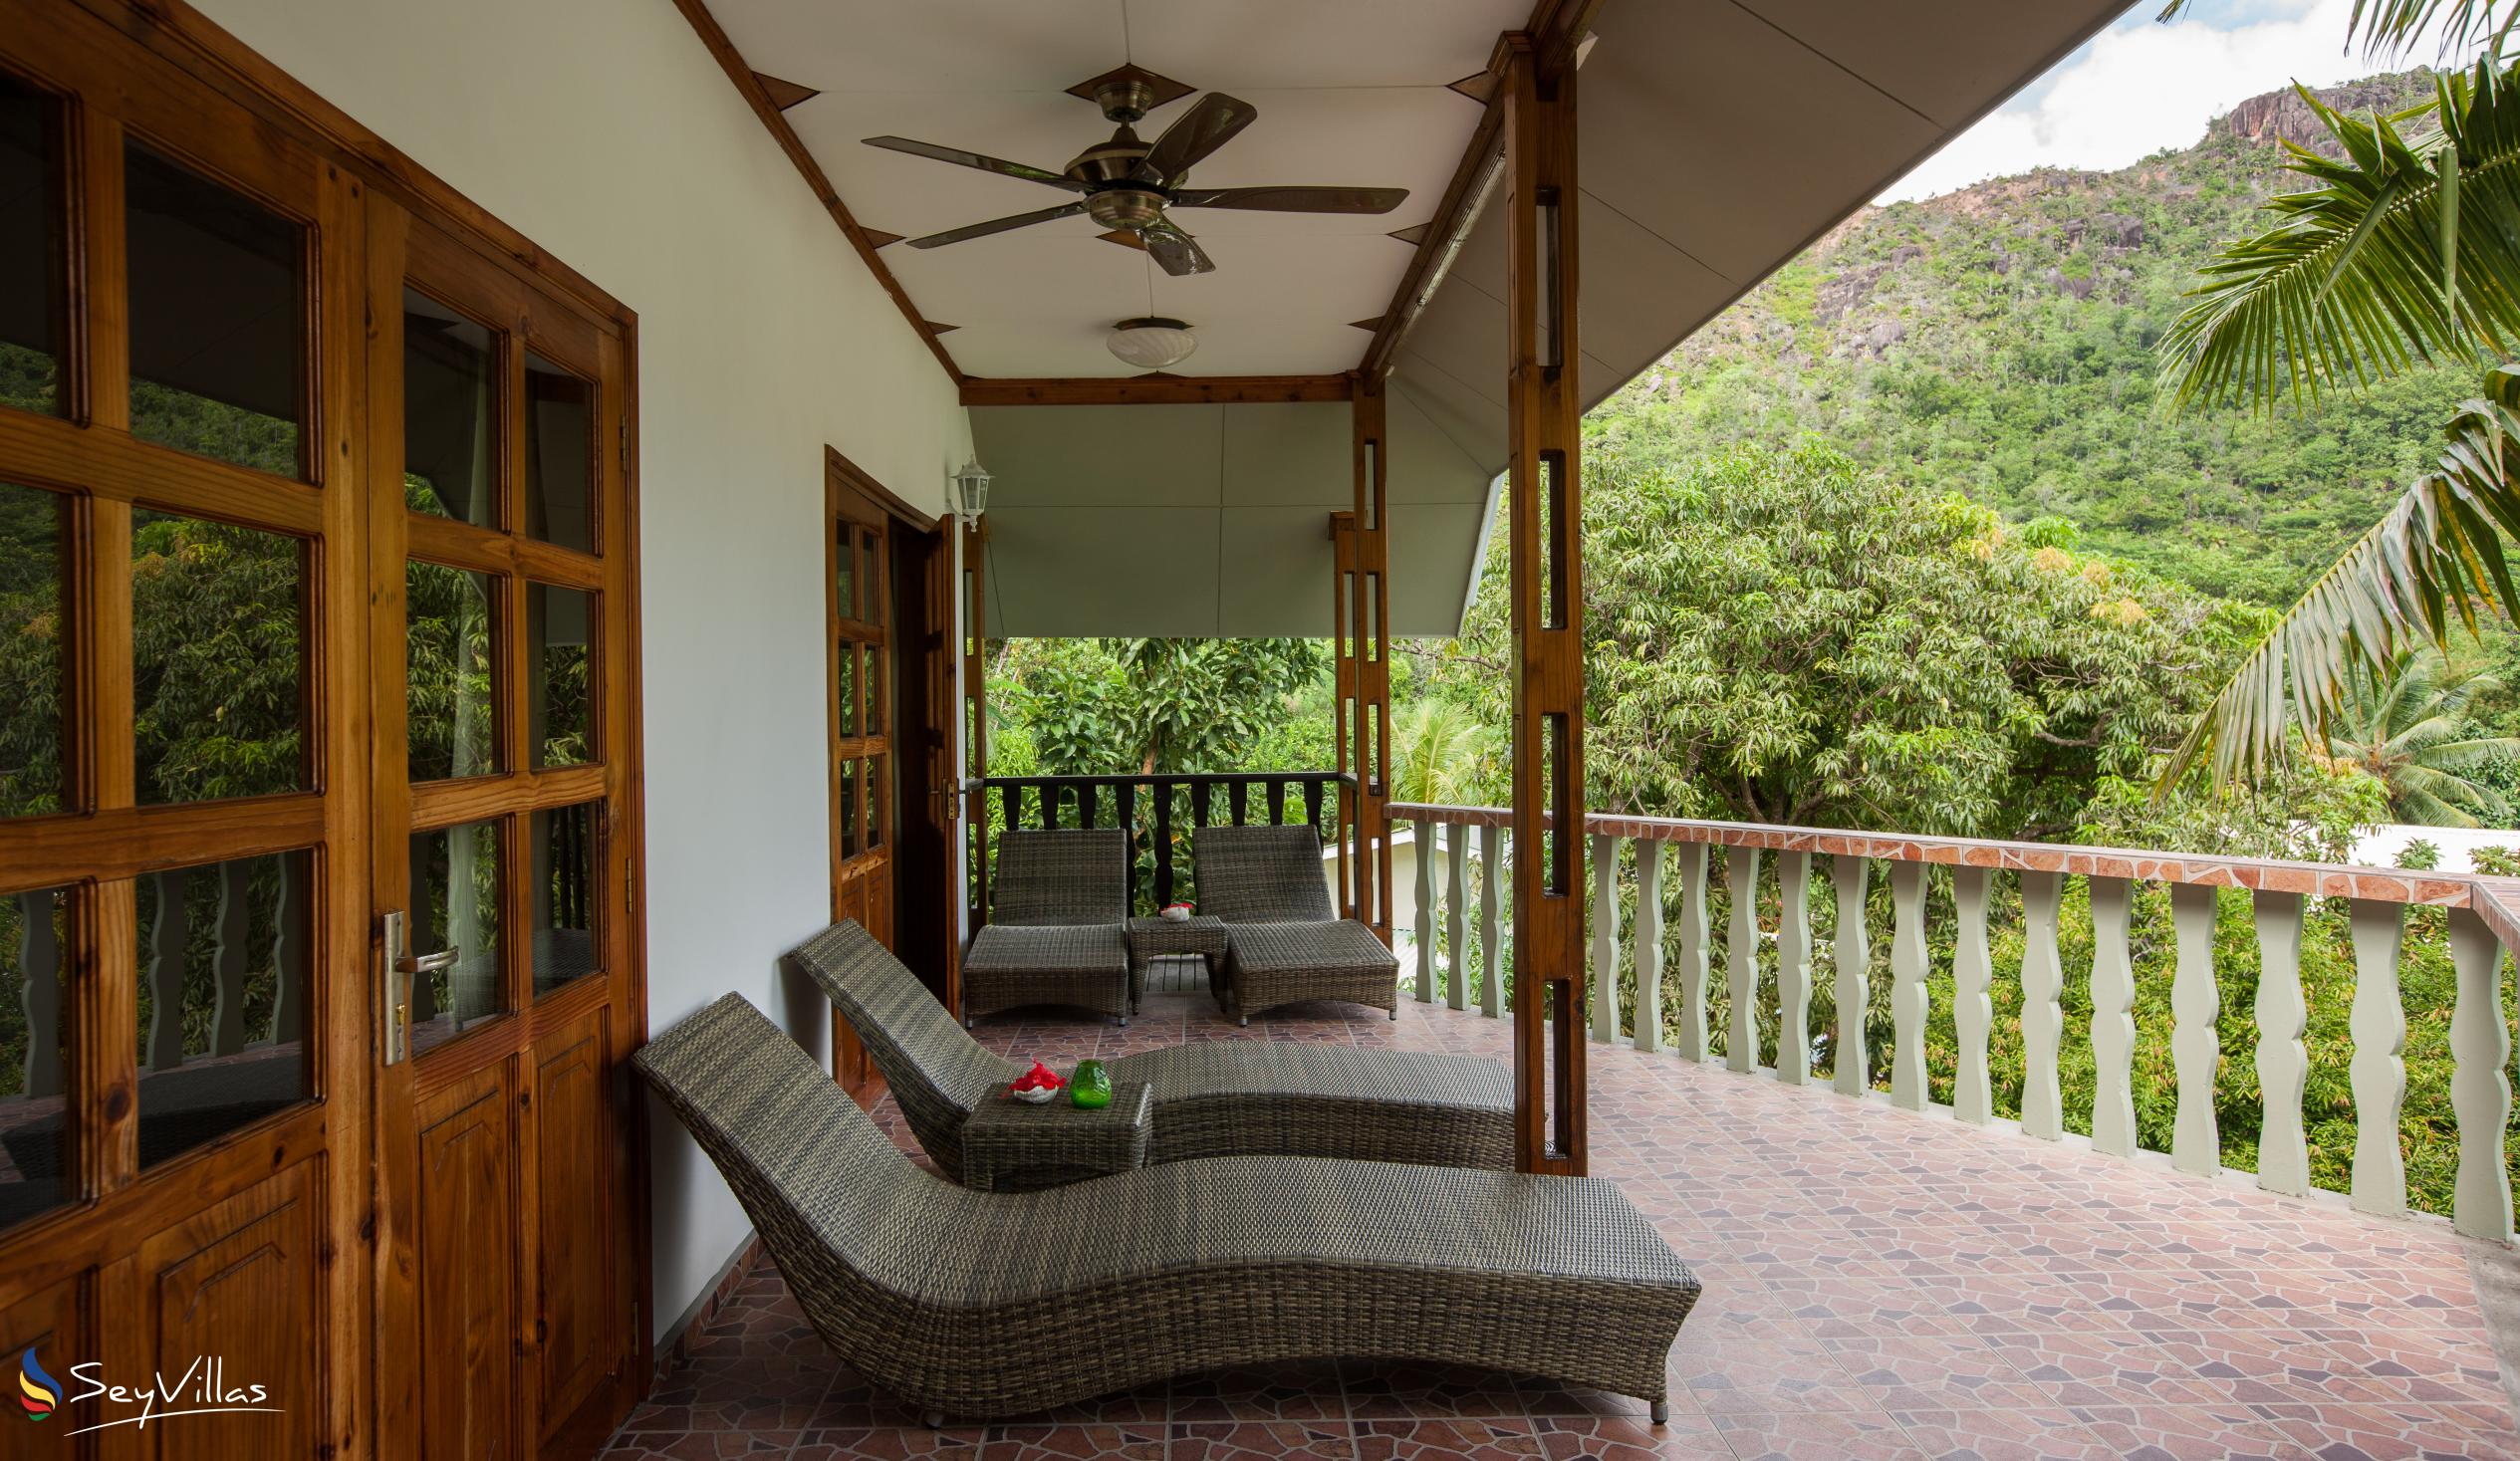 Foto 78: Sea View Lodge - Grande villa sur pilotis - Praslin (Seychelles)